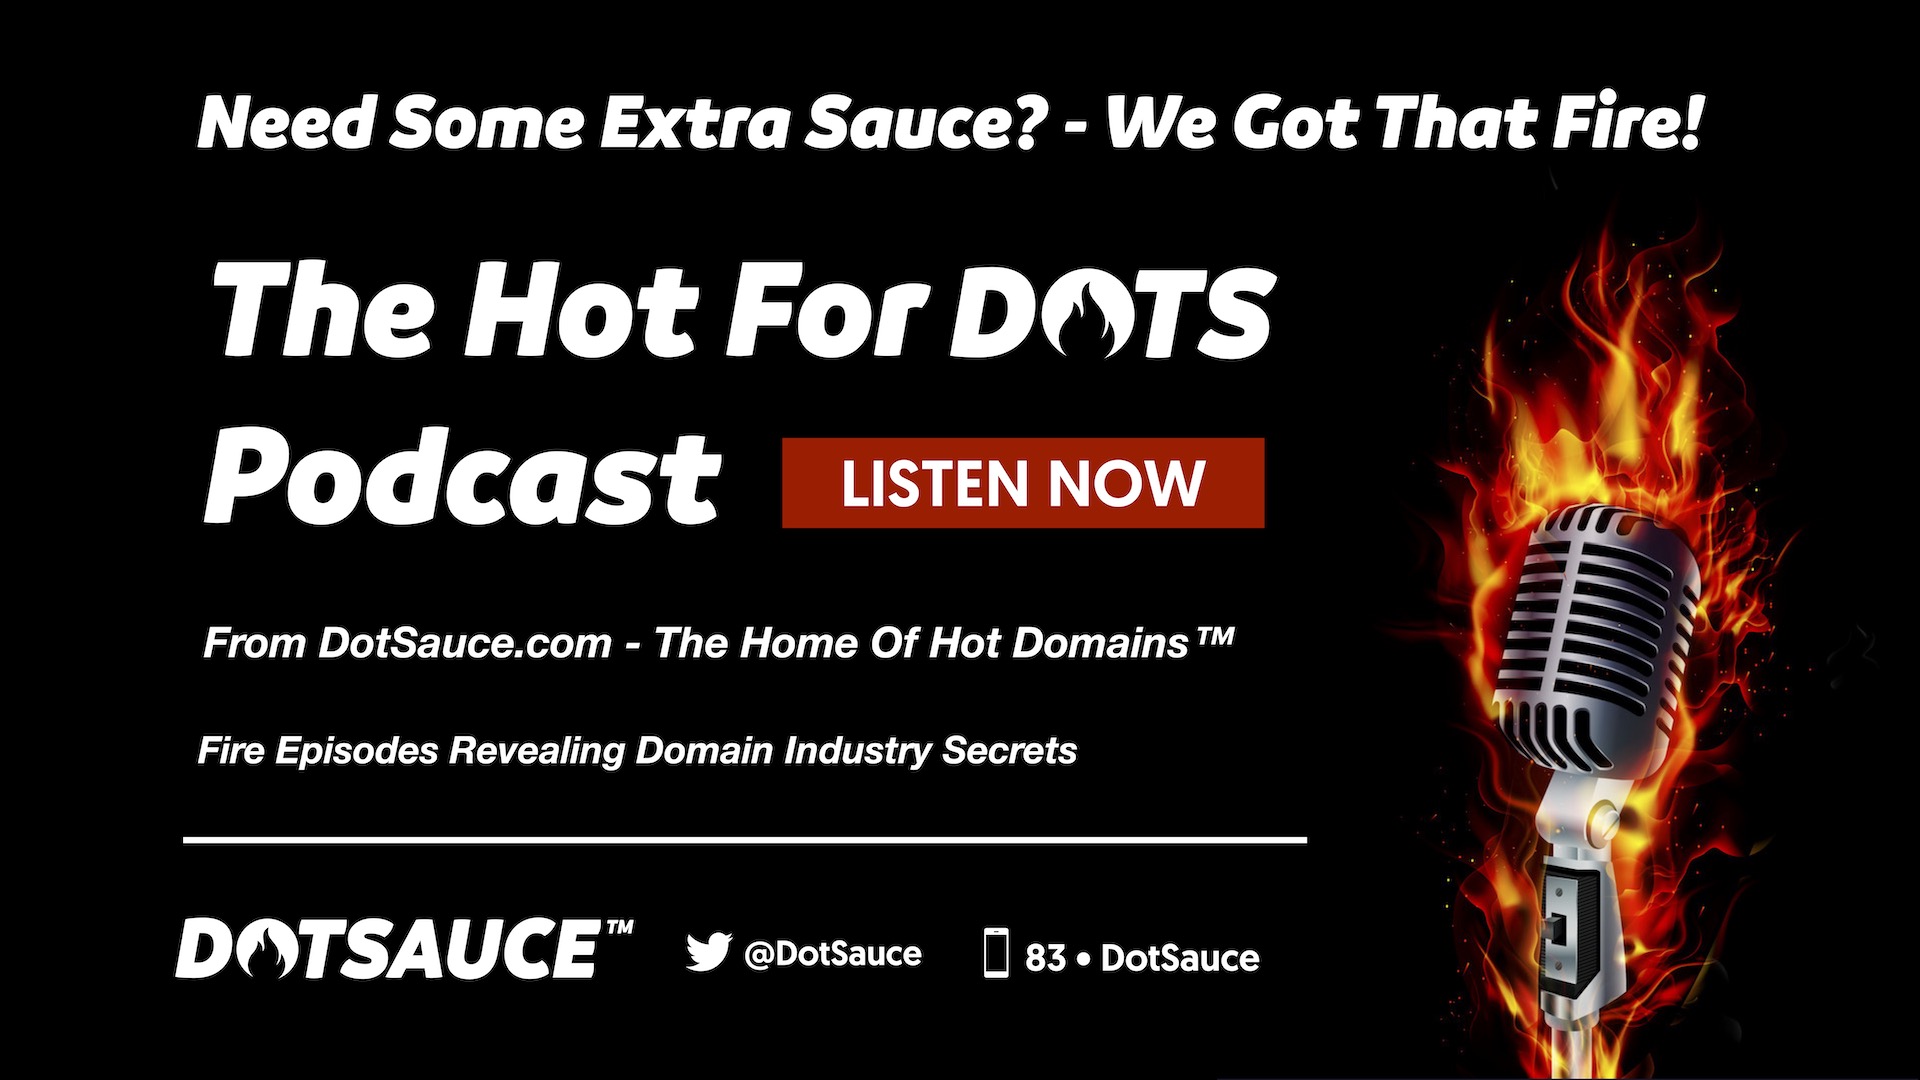 DotSauce Podcast